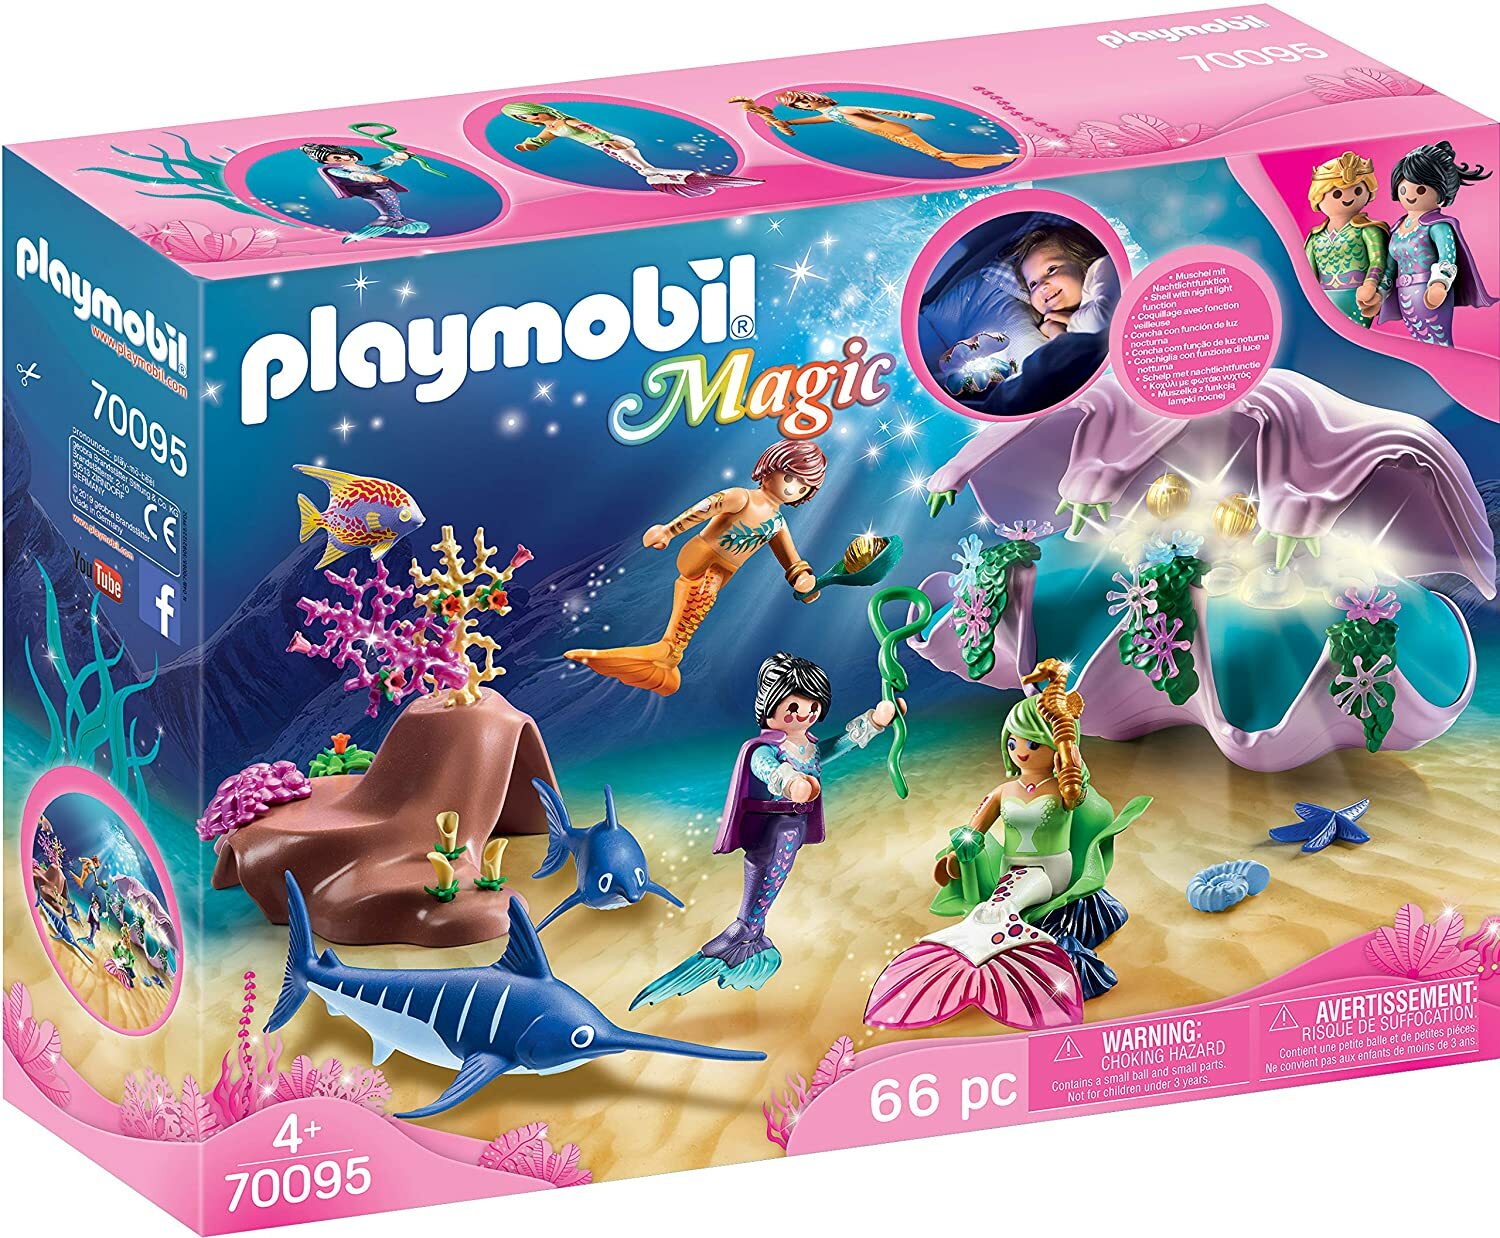 Playmobil Magic Pearl Shell Nightlight 66Pcs